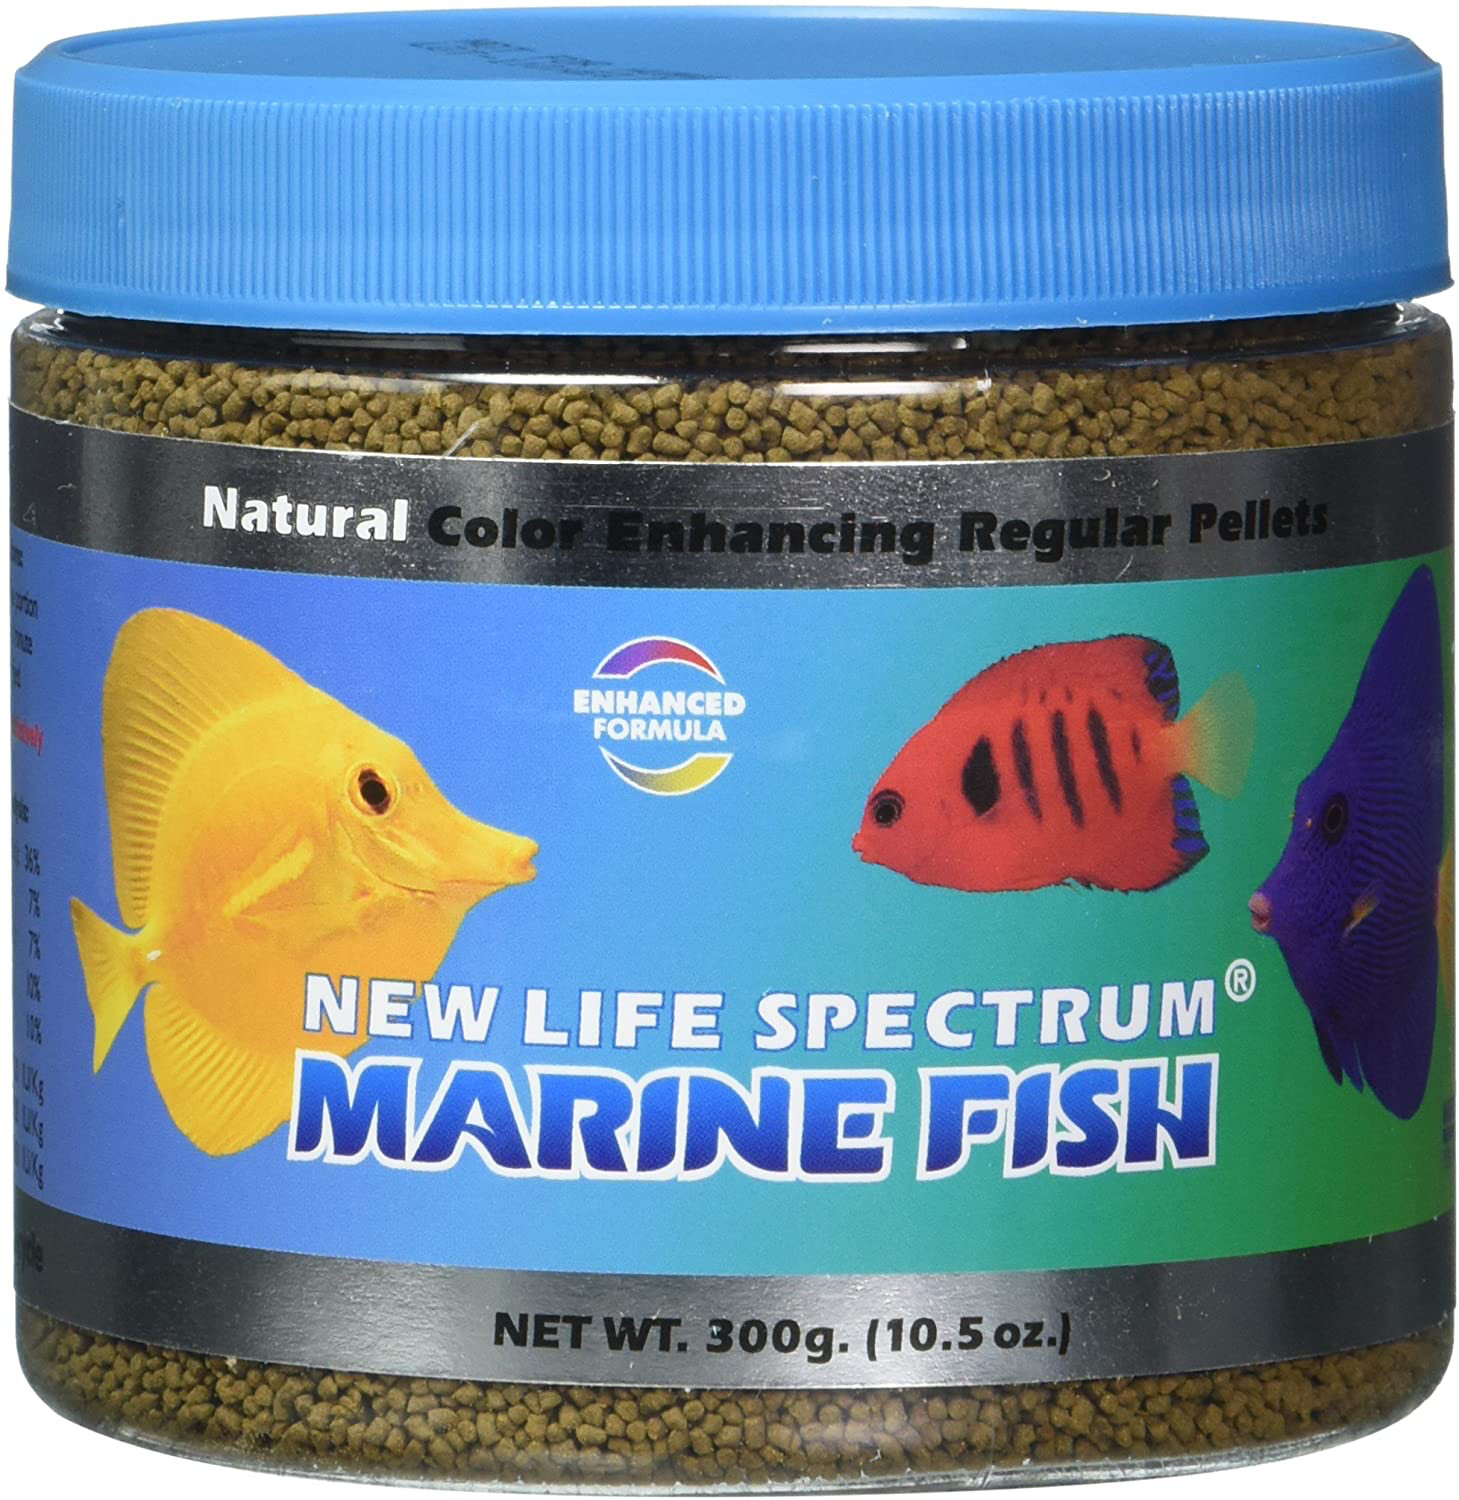 NLS Marine Fish Diet 300g